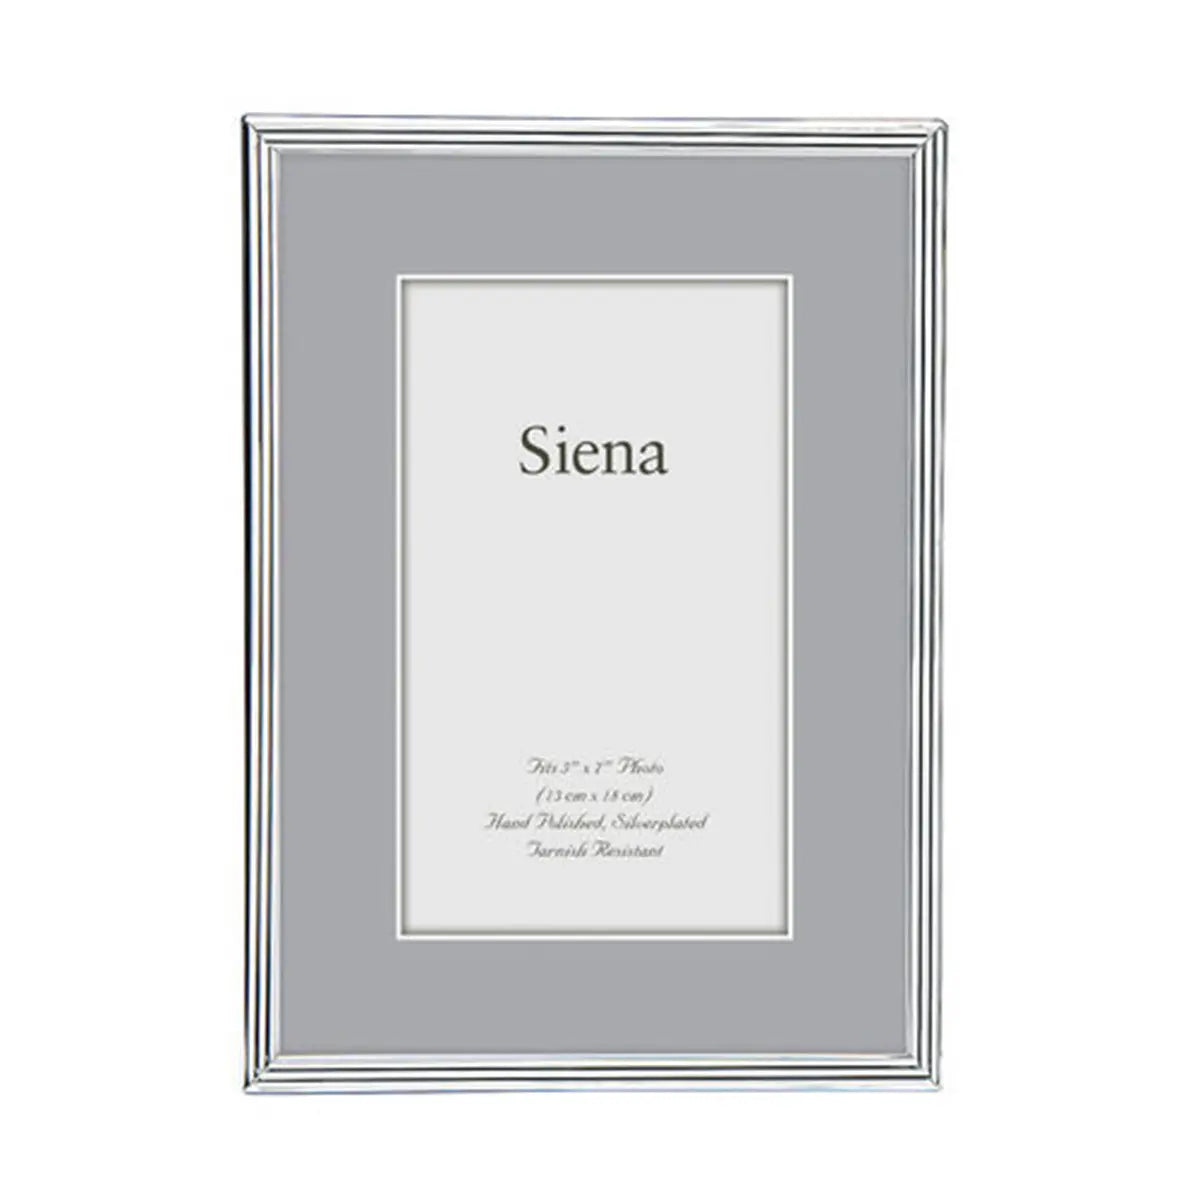 Siena Narrow Grooved Silverplate Frame